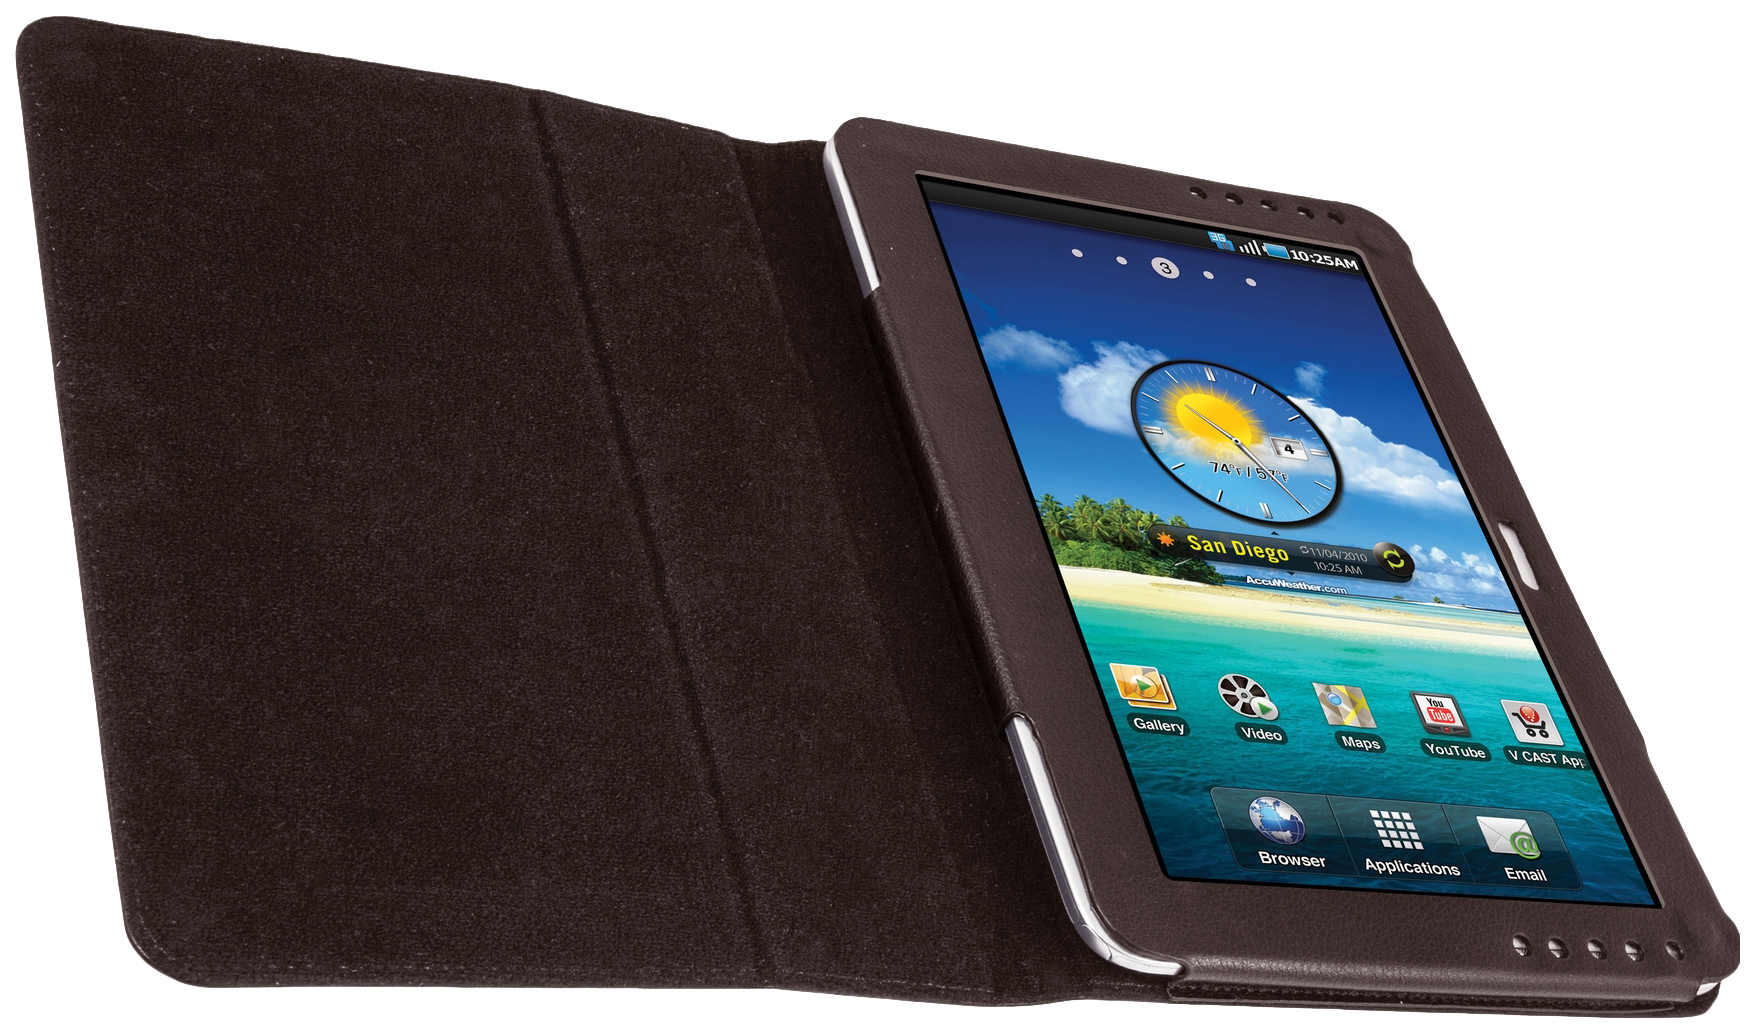 Чехол для планшета 11 дюймов. Samsung Galaxy Tab 2 10.1 чехол. Чехол на планшет самсунг галакси таб 2. Чехол для планшета мате пад т10с. ДНС чехол для планшета 10.5 дюймов.